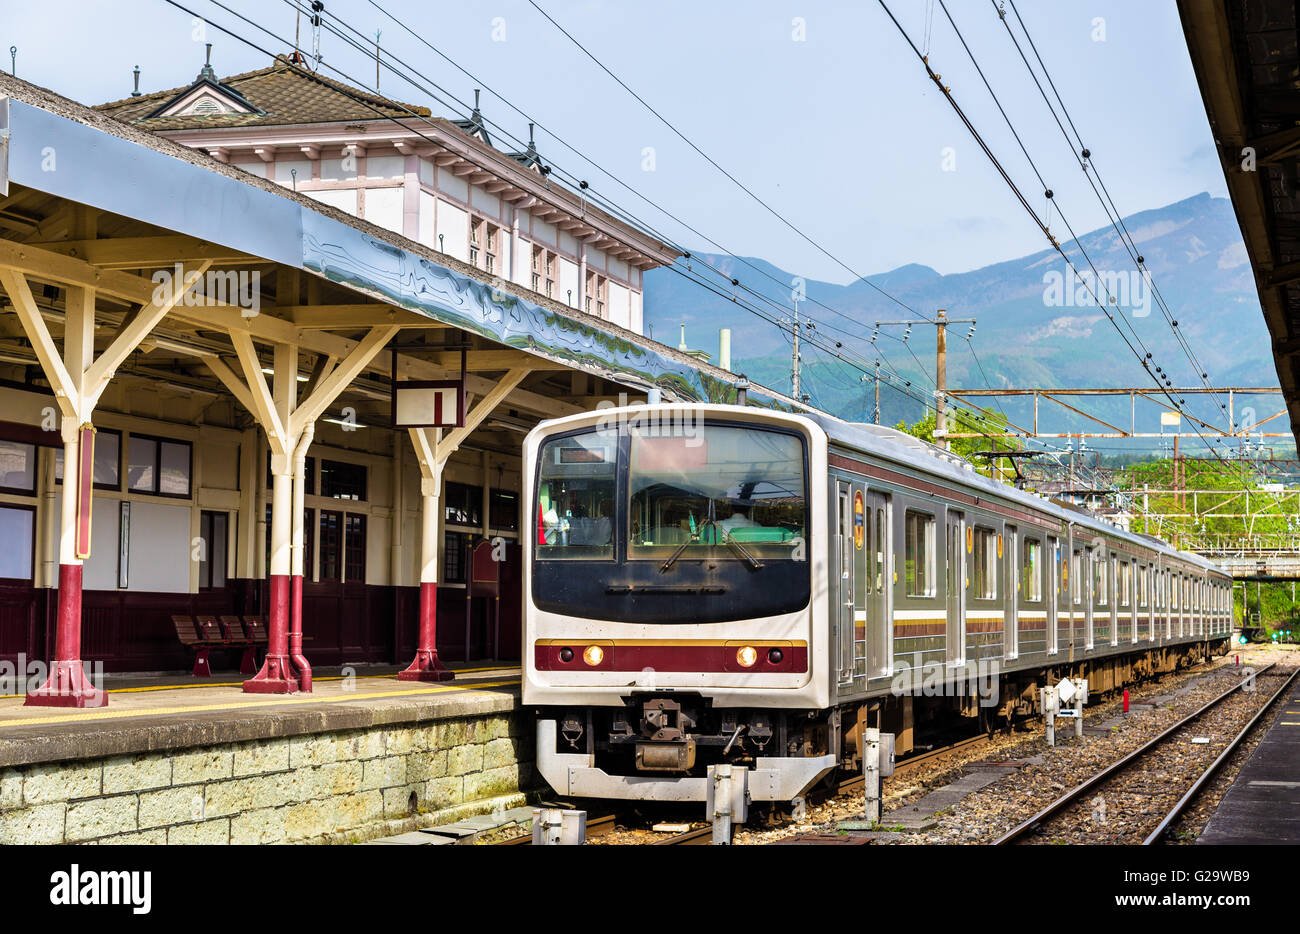 Local train at Nikko railway station - Japan Stock Photo